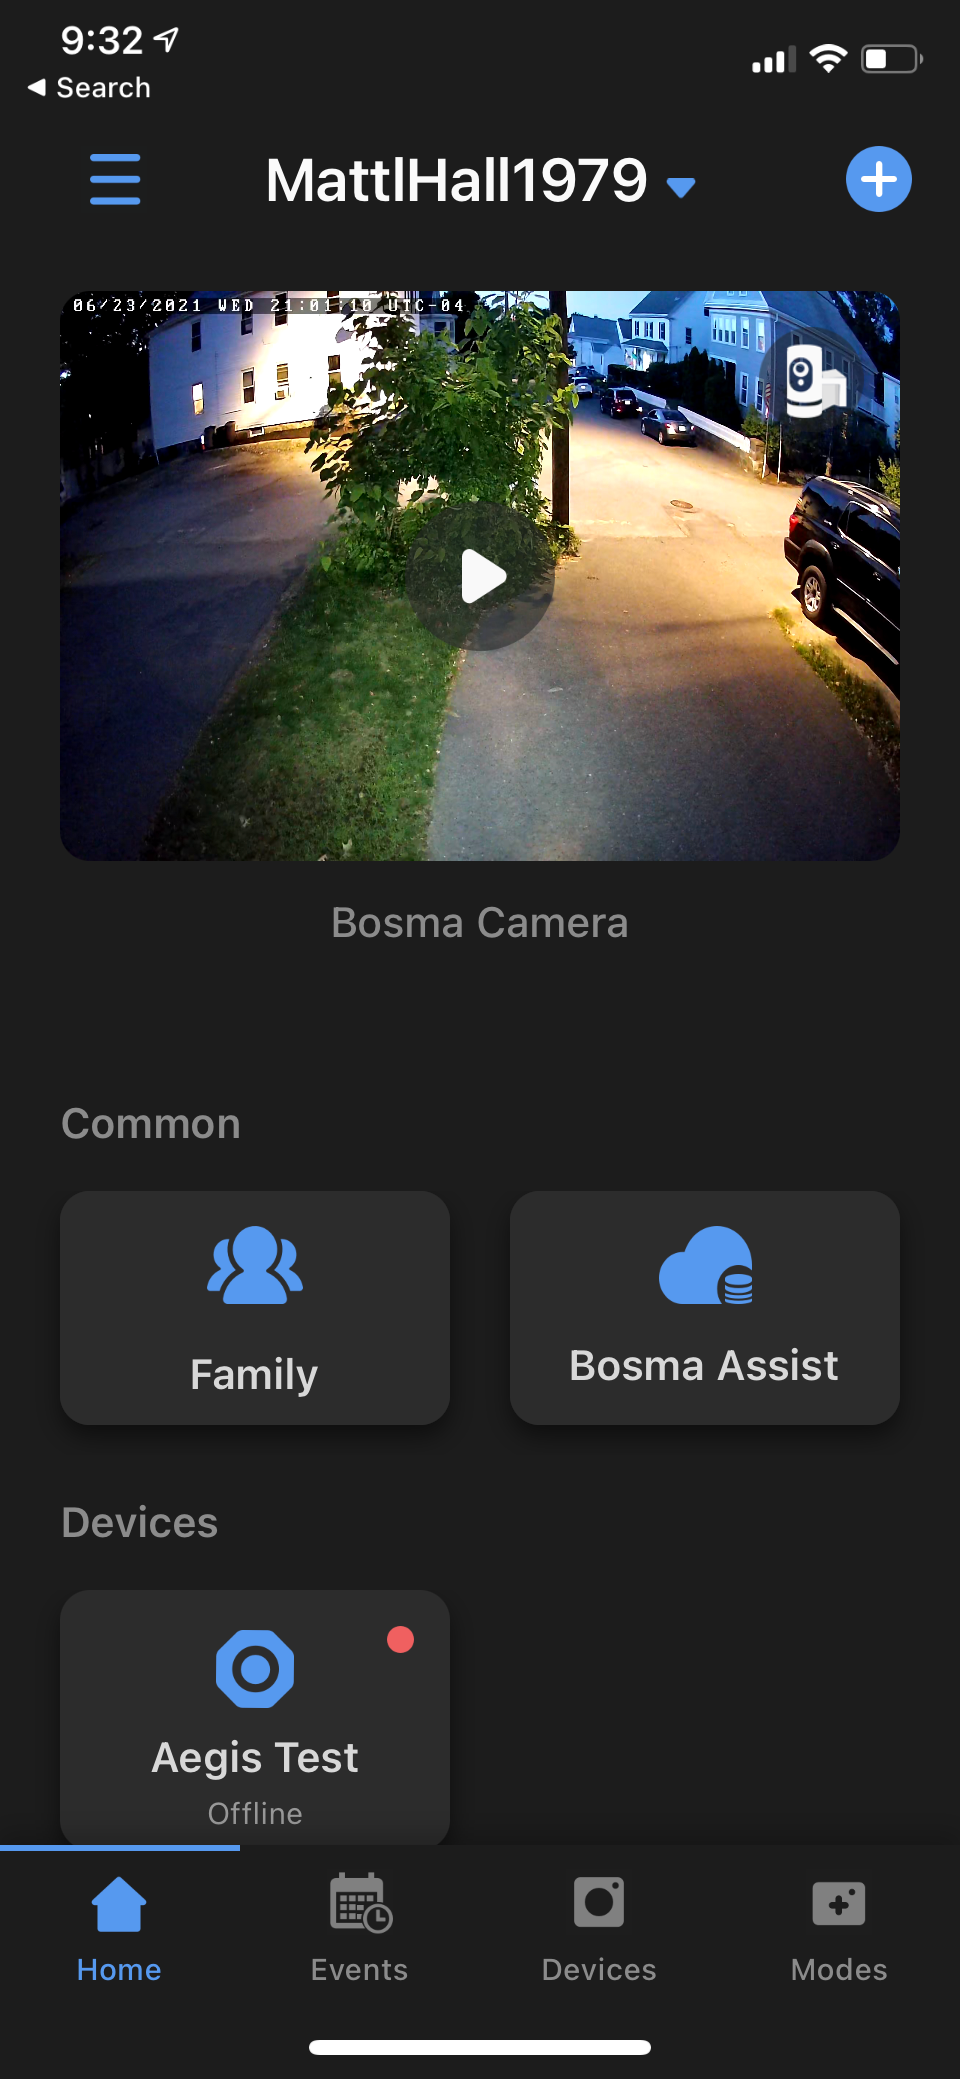 Main Screen for Bosma App at Night